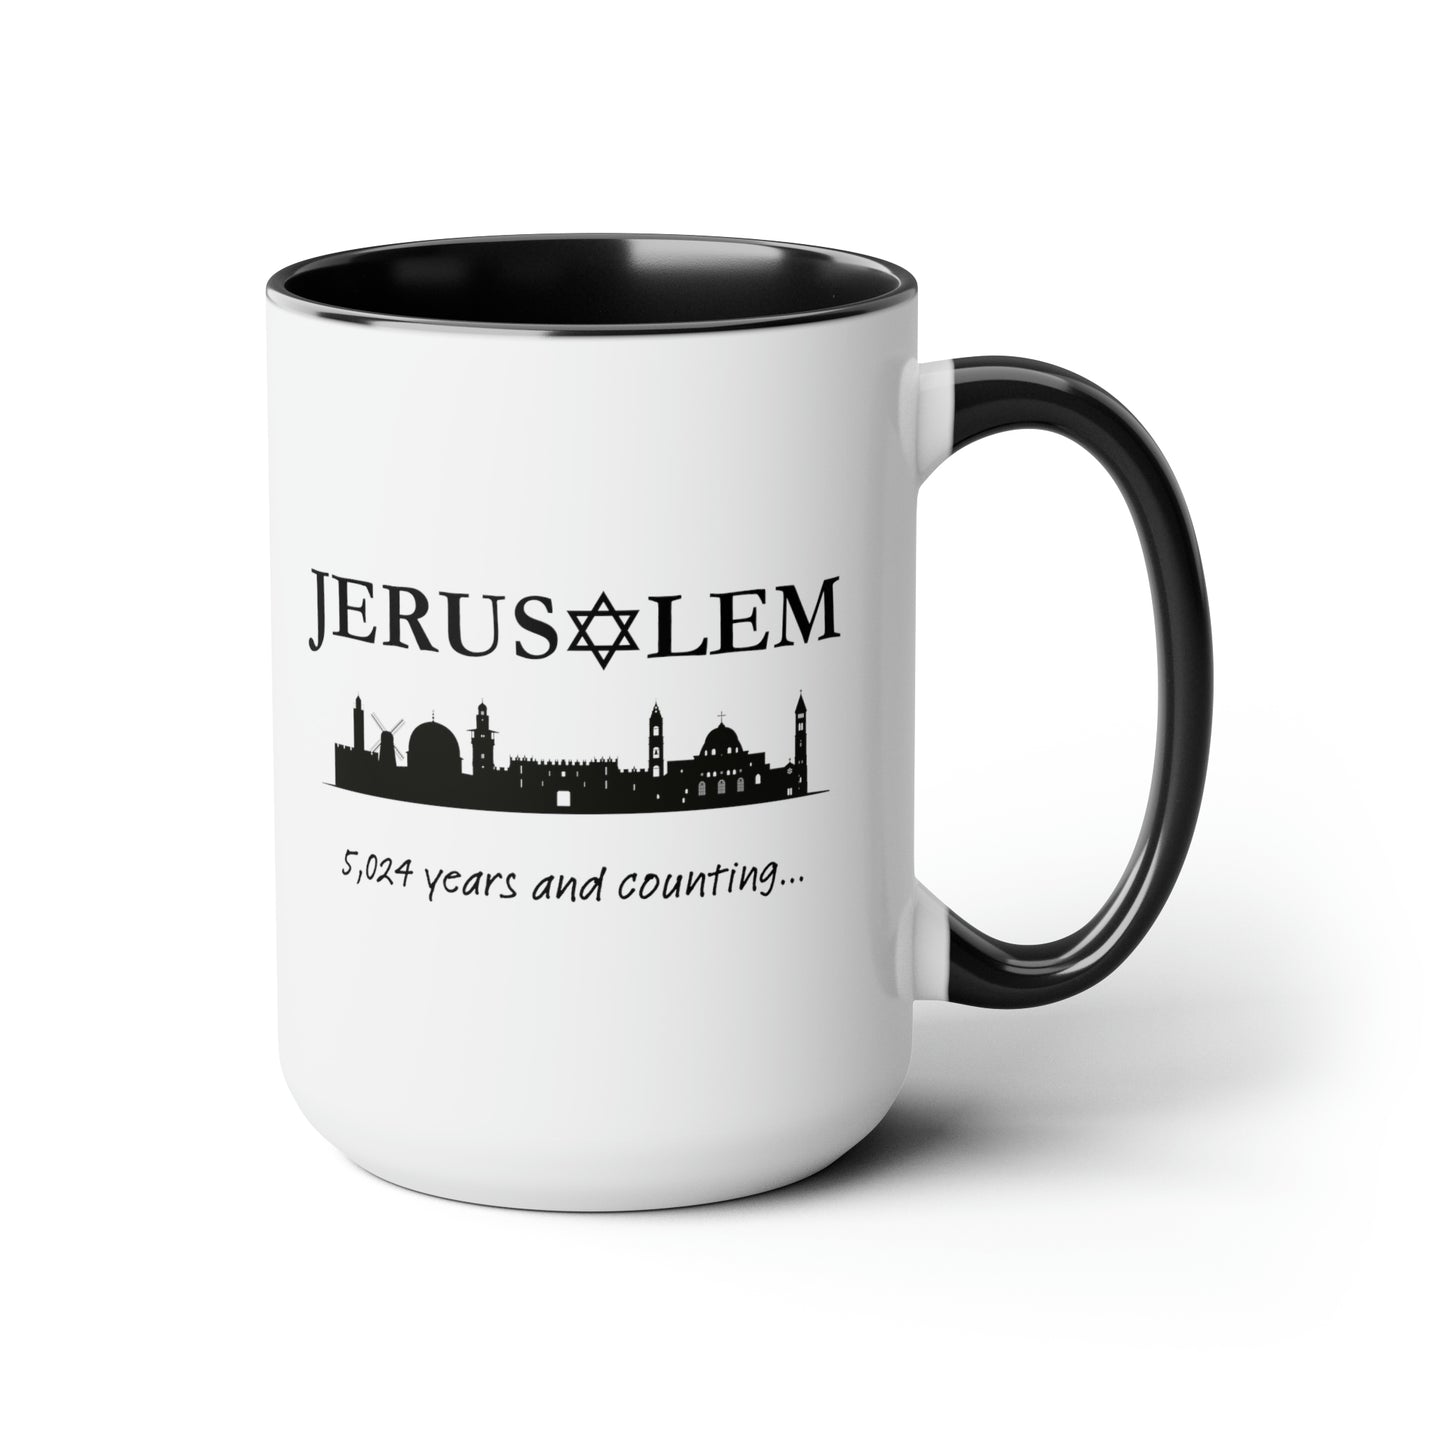 Jerusalem - 5,024 Years and Counting... Two-Tone Coffee Mug, 15oz